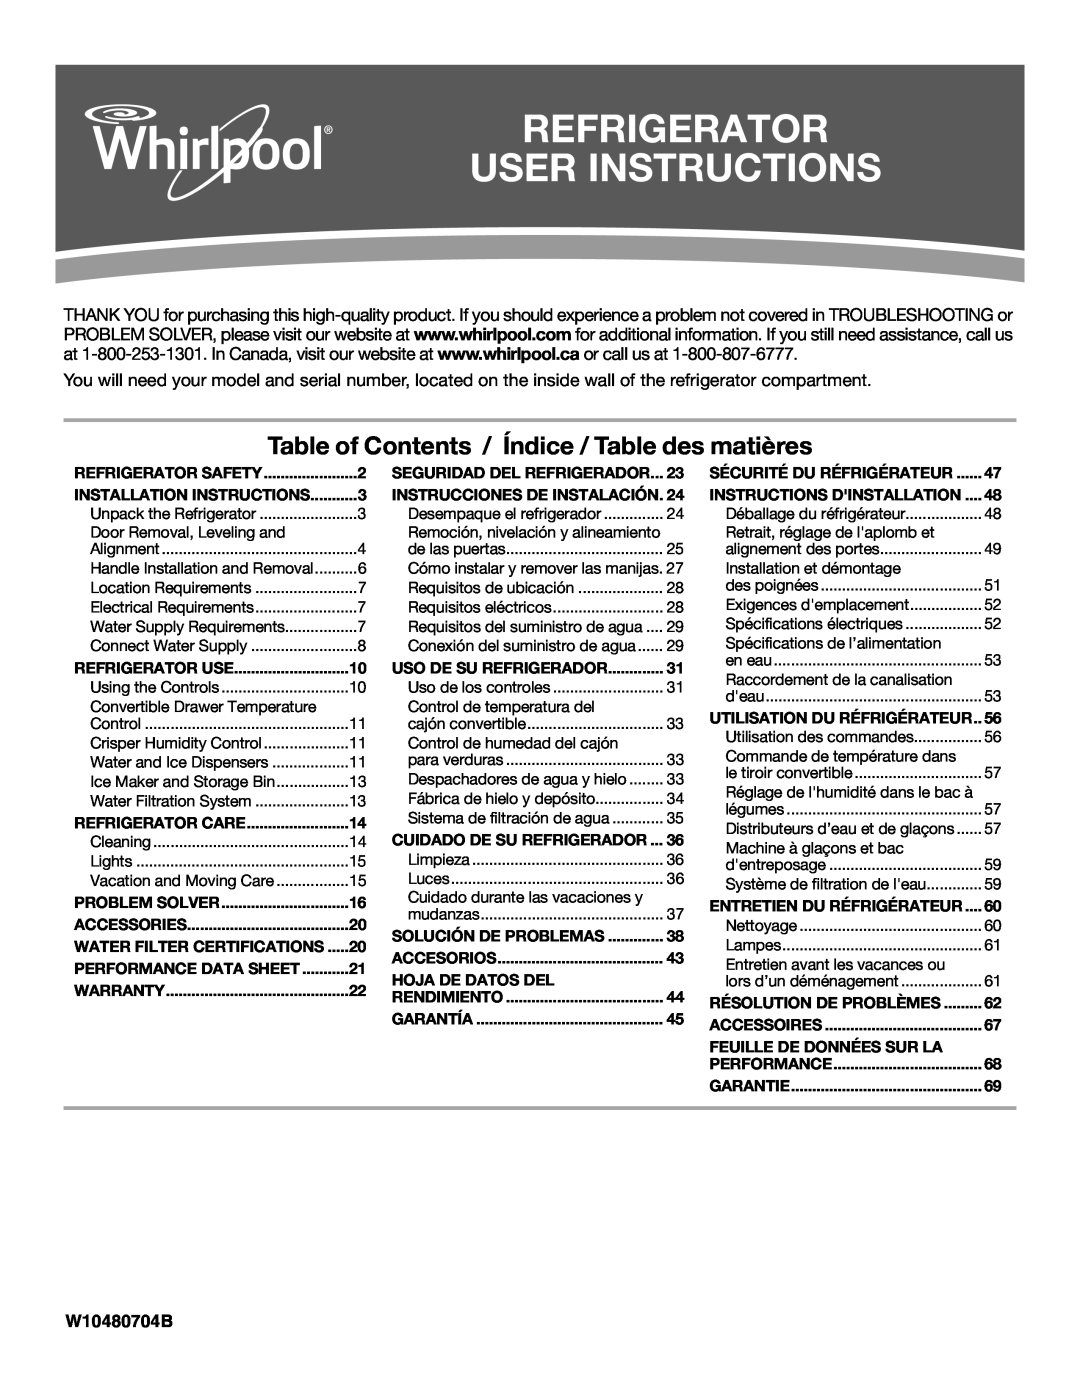 Whirlpool ED2KHAXVB installation instructions Refrigerator User Instructions, W10480704B 